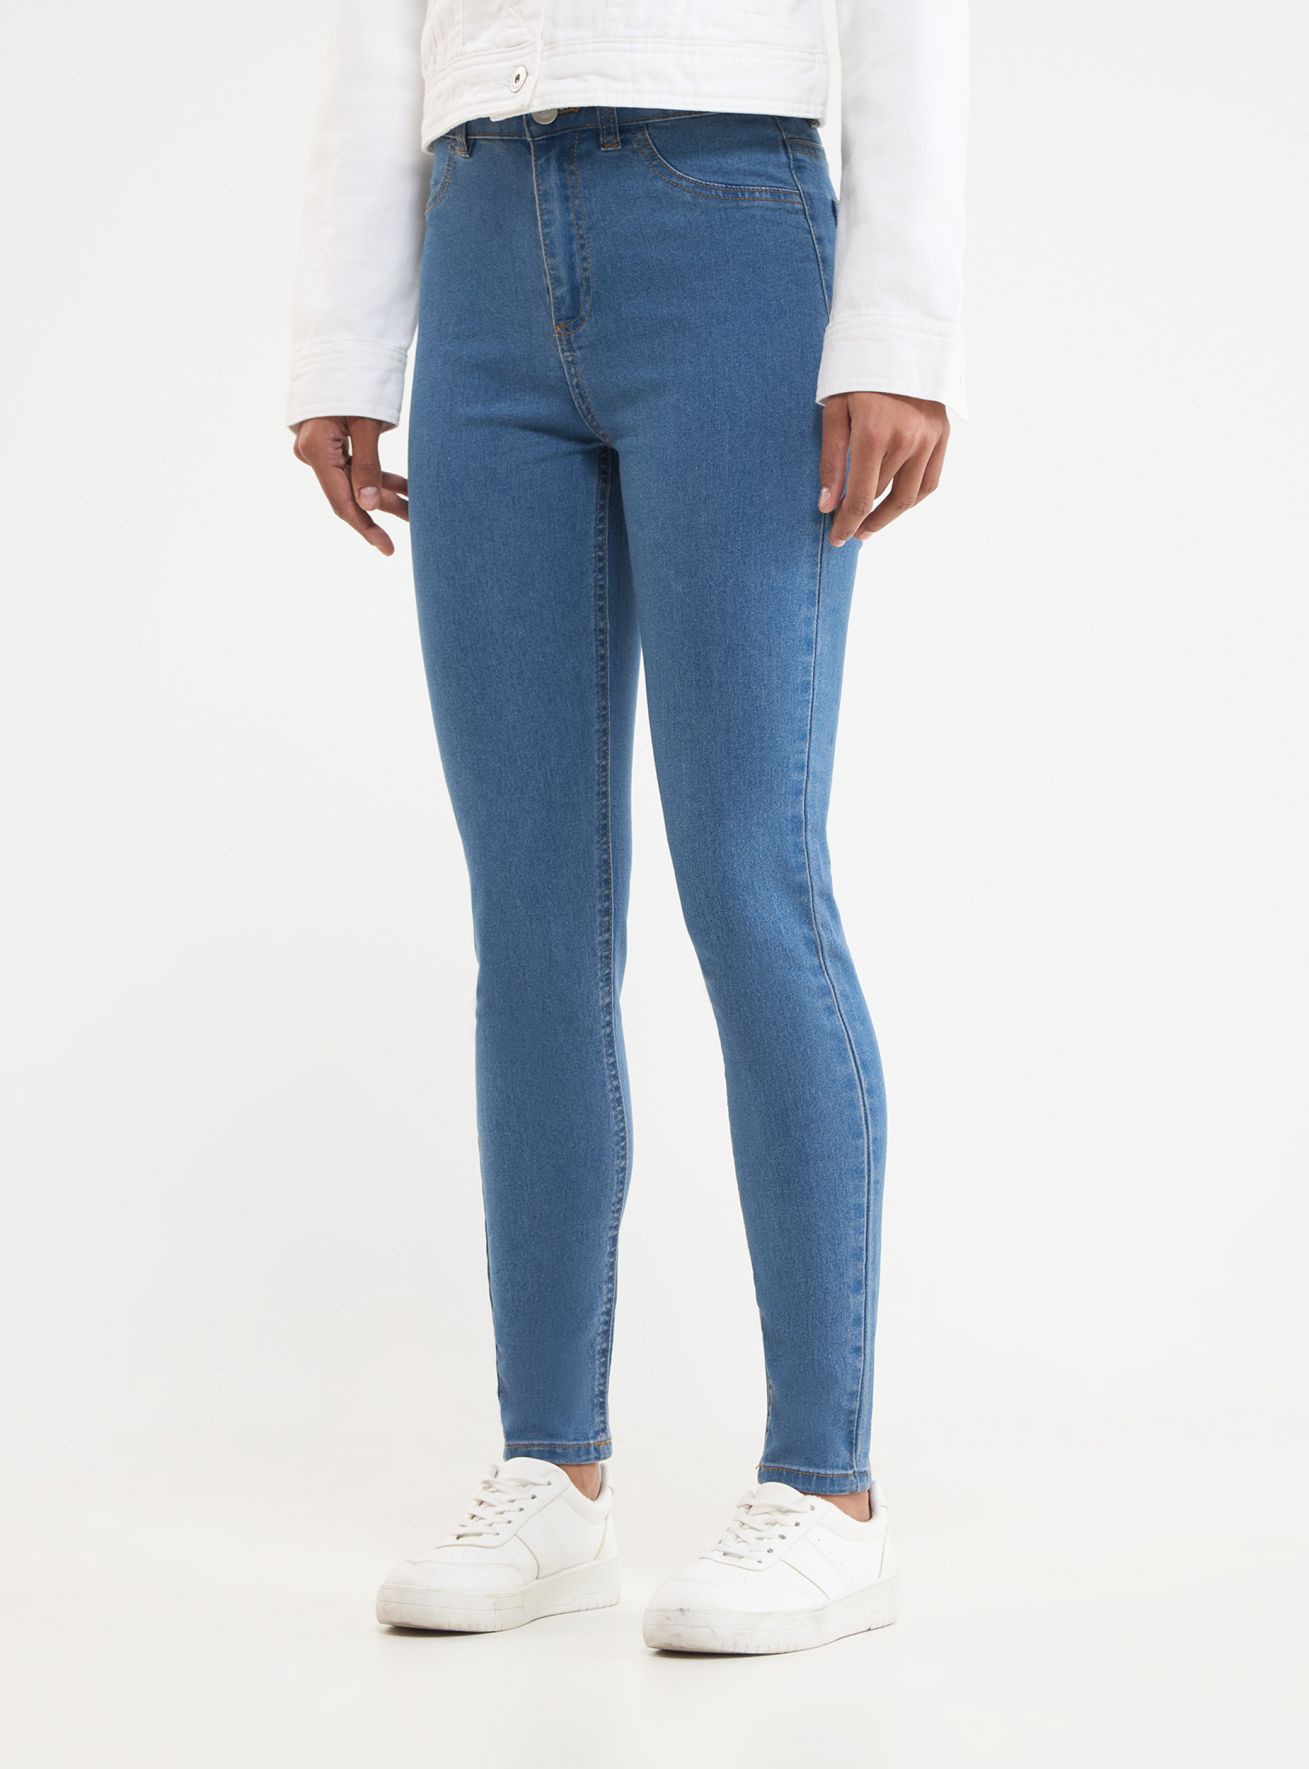 Pantalone Jeans Lungo Donna Terranova